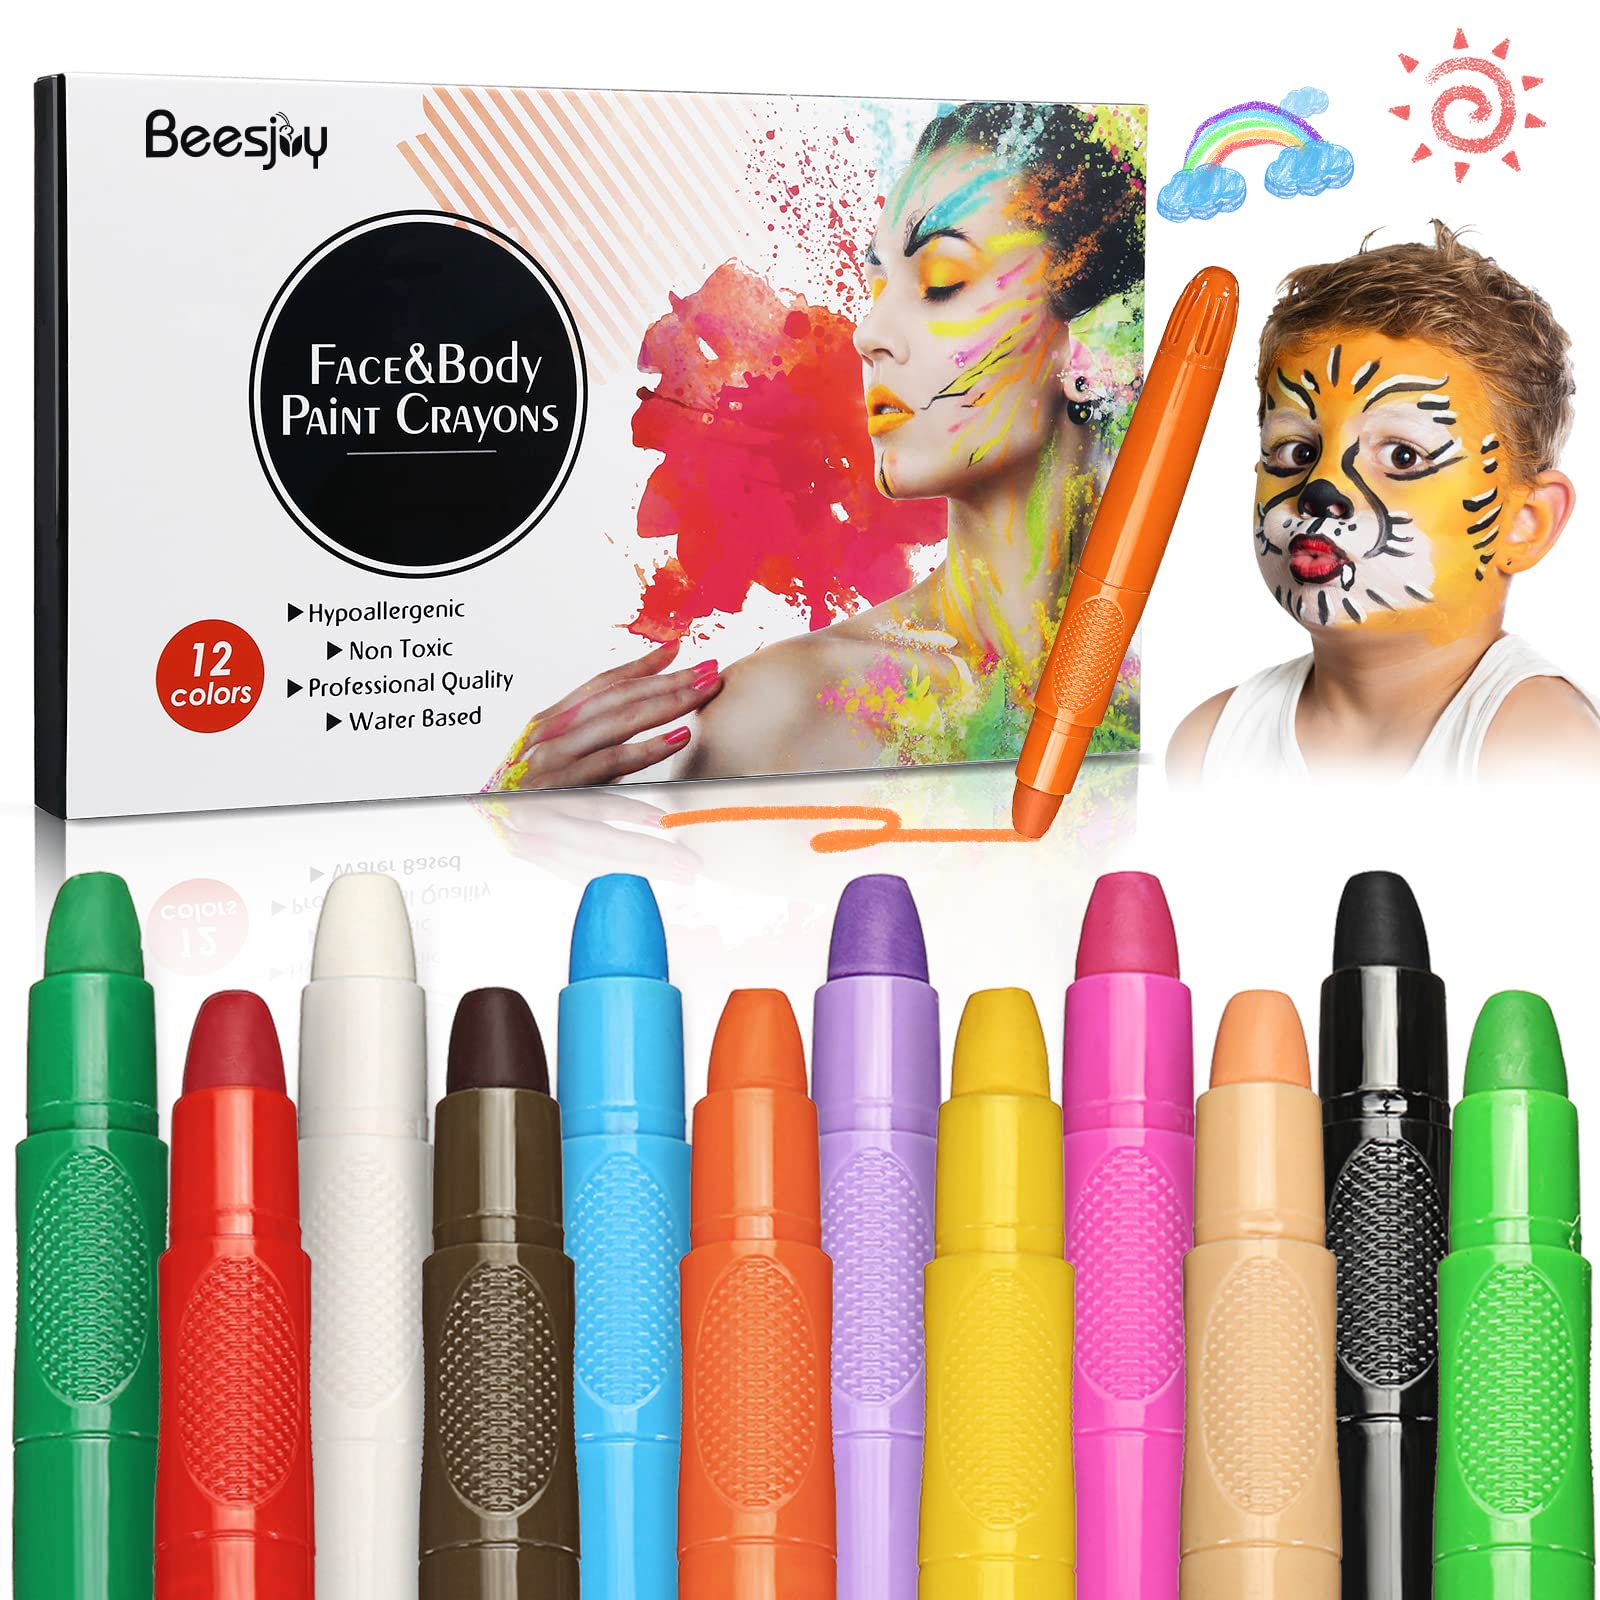 Face Paint Kit Makeup Painting Set For Kids